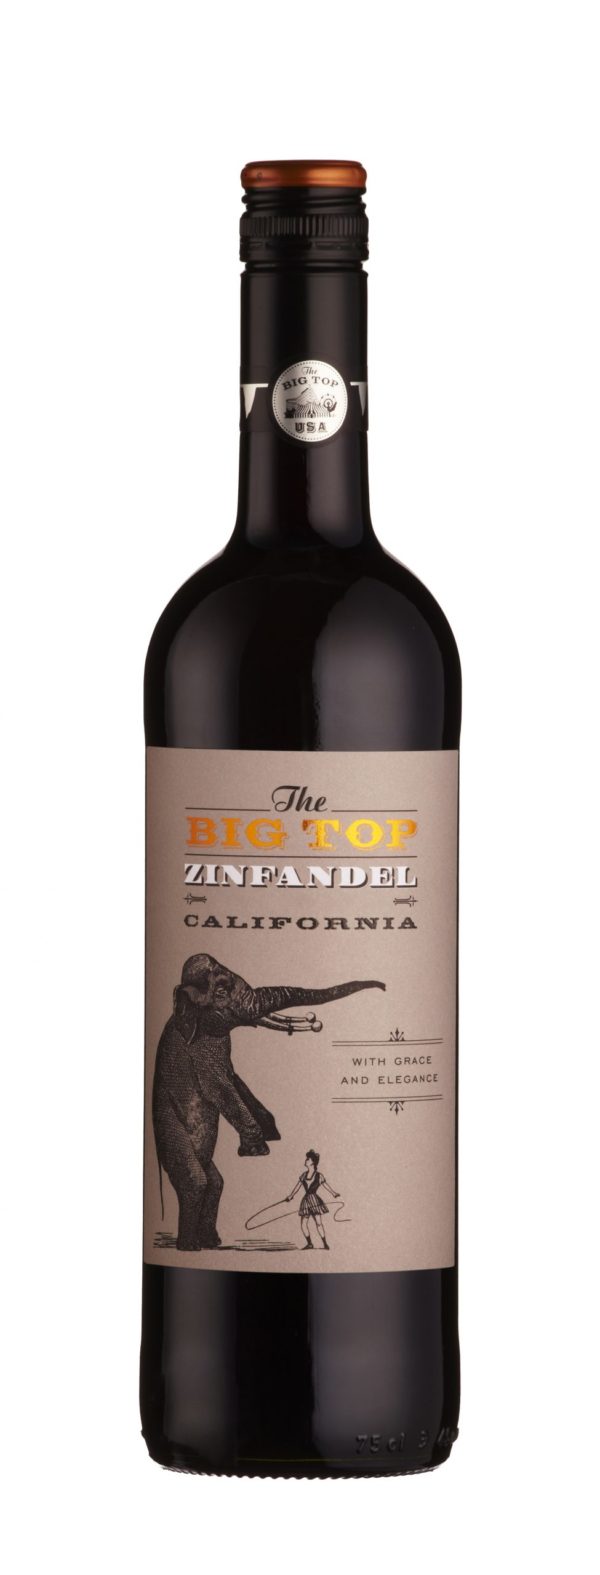 The Big Top ‘Old Vine’ Zinfandel, Lodi